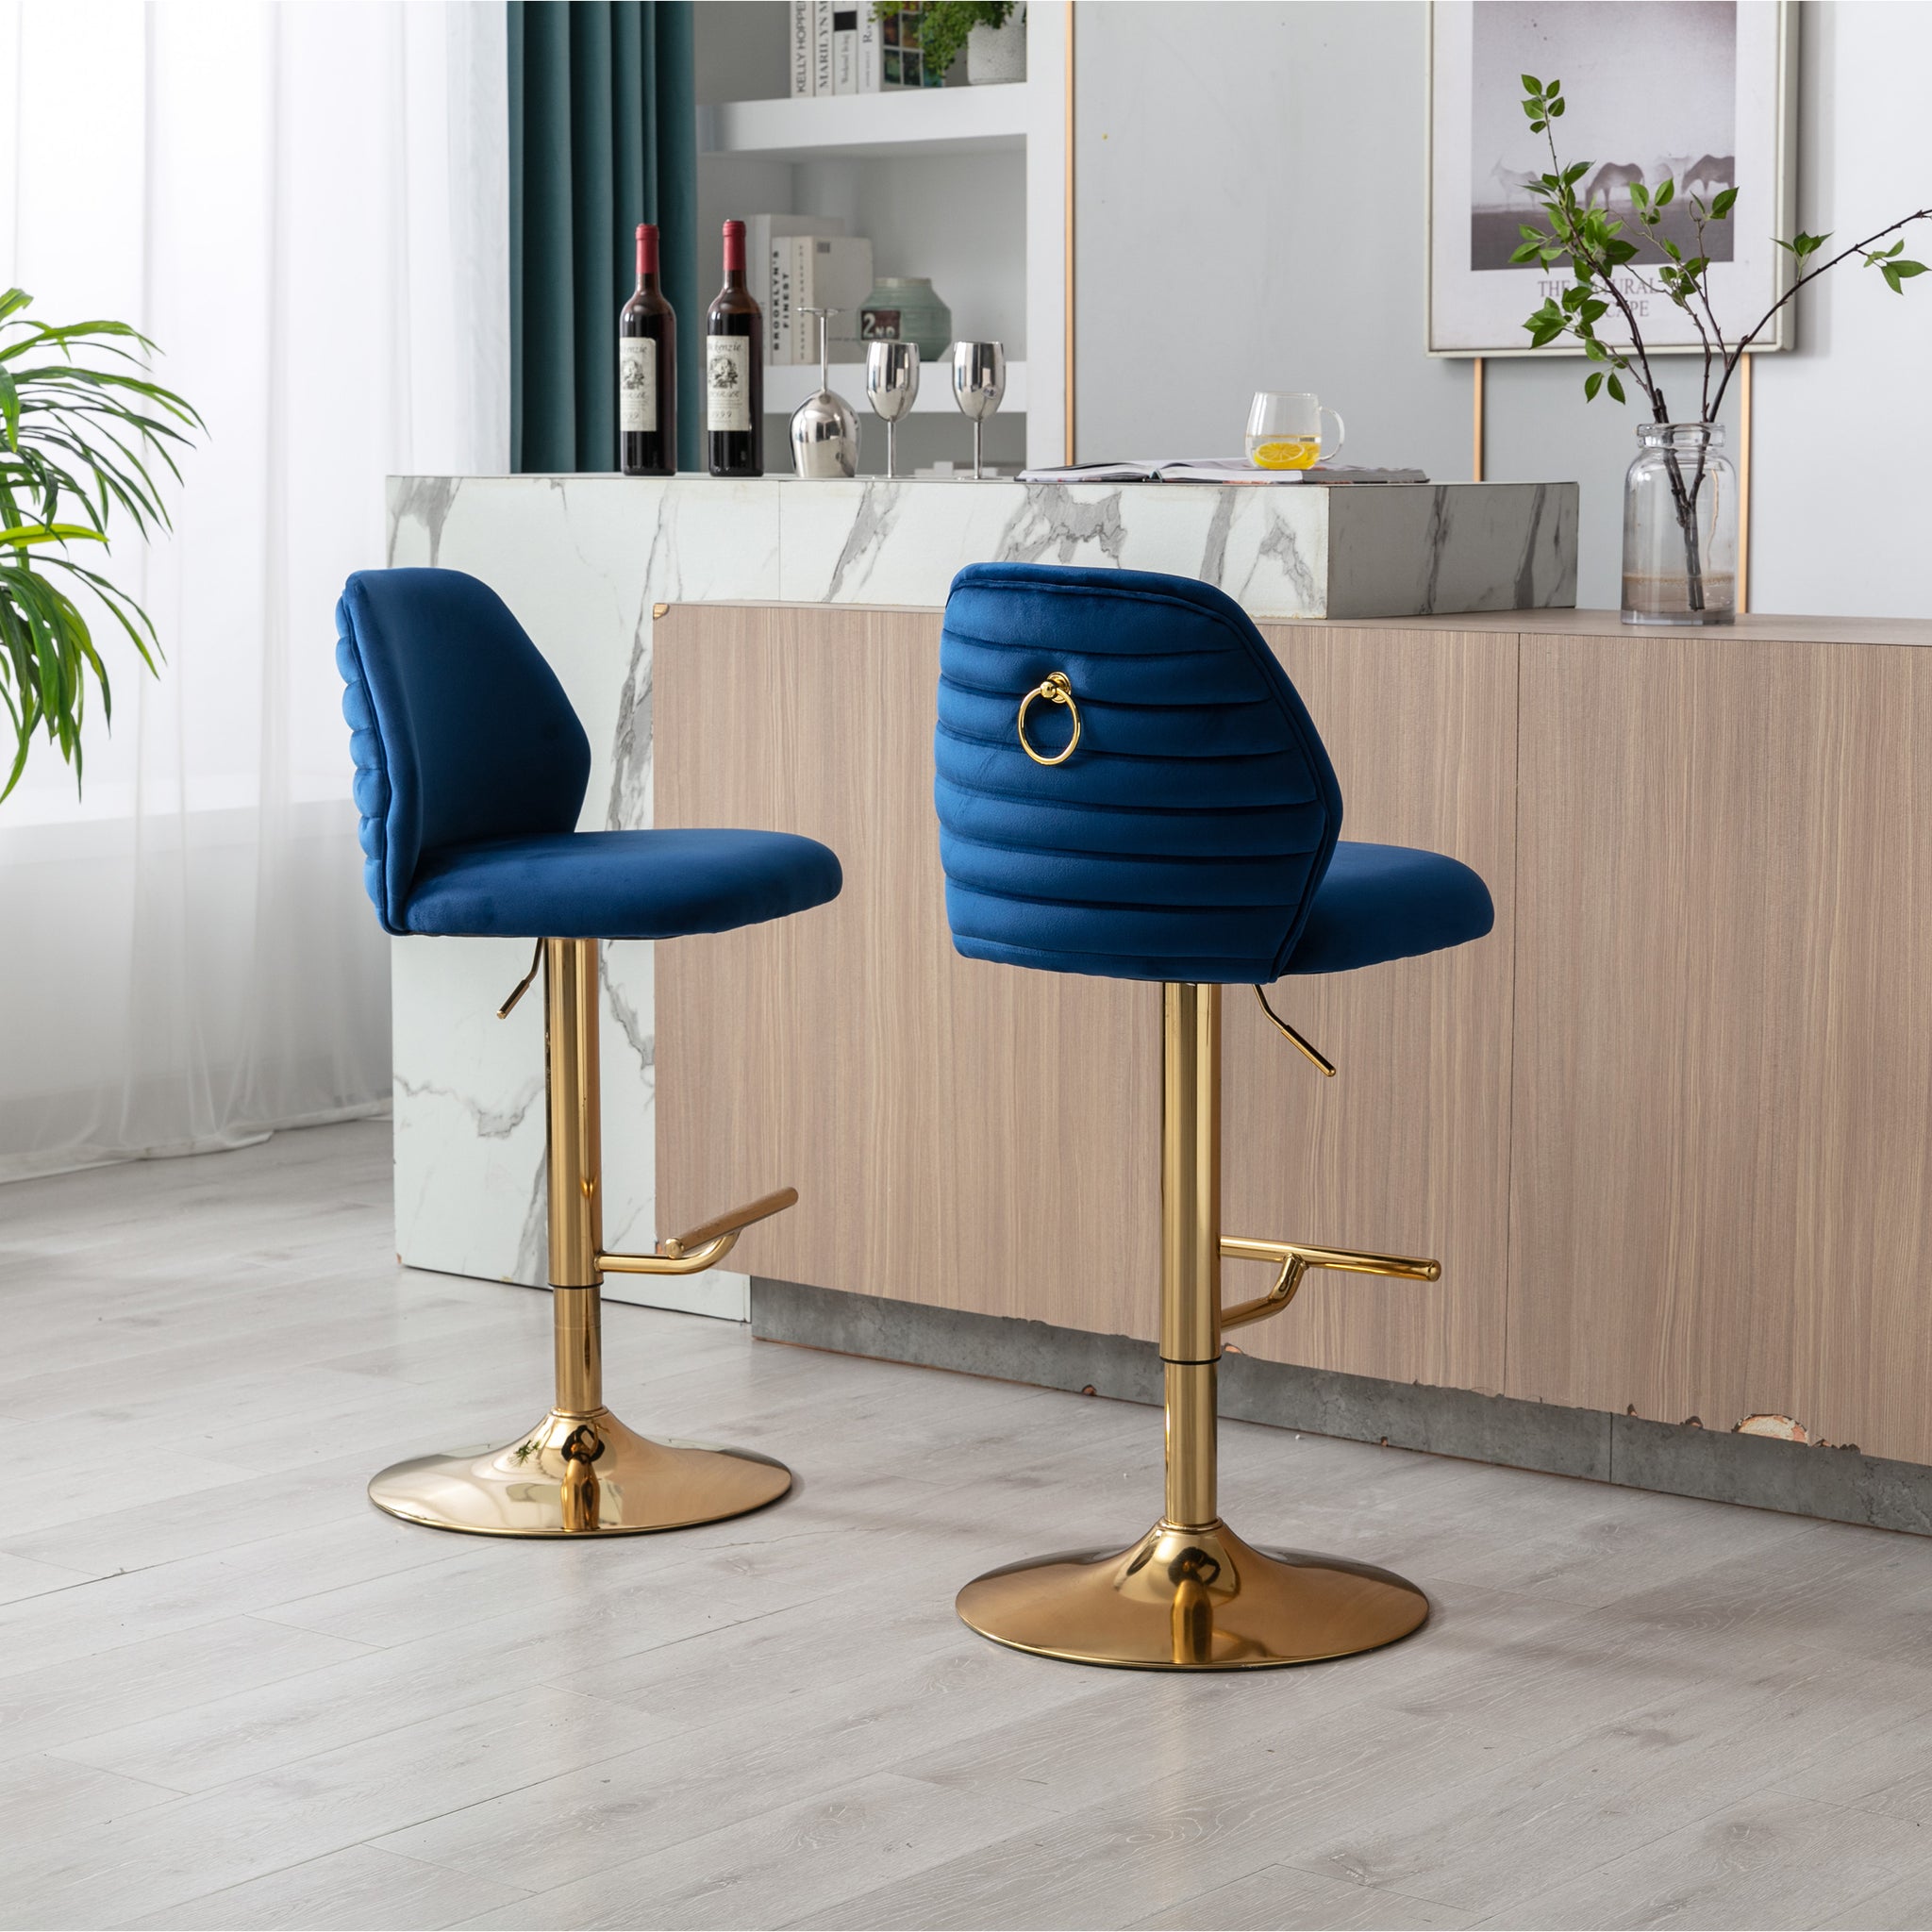 Swivel Bar Stools Chair Set of 2 Modern Adjustable navy blue-foam-fabric